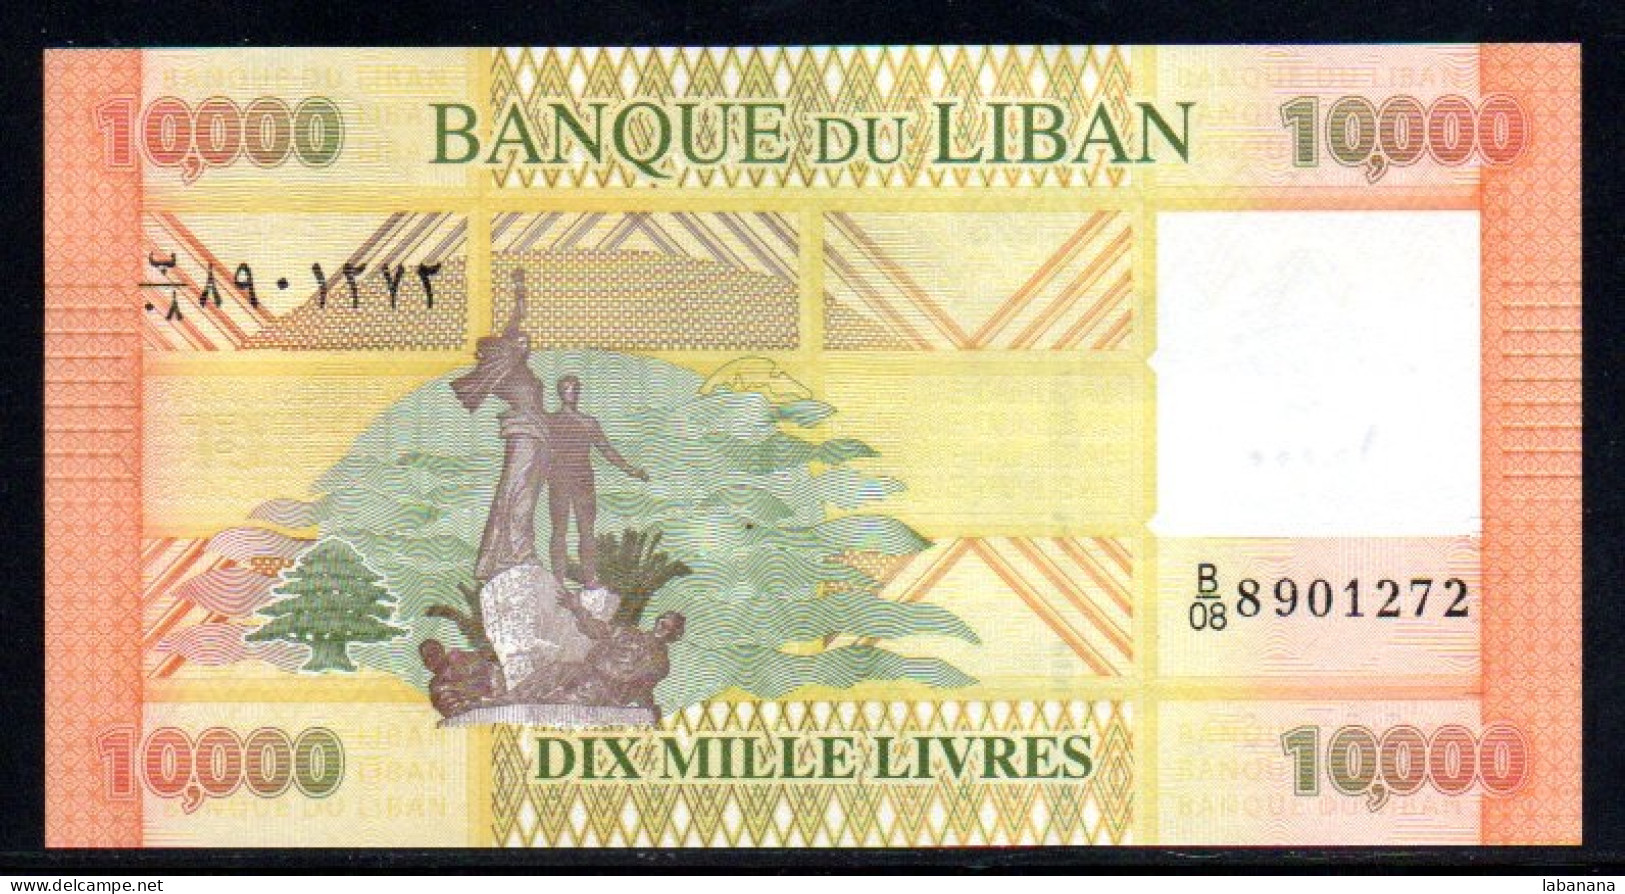 688-Liban 10 000 Livres 2014 B08 Neuf/unc - Liban